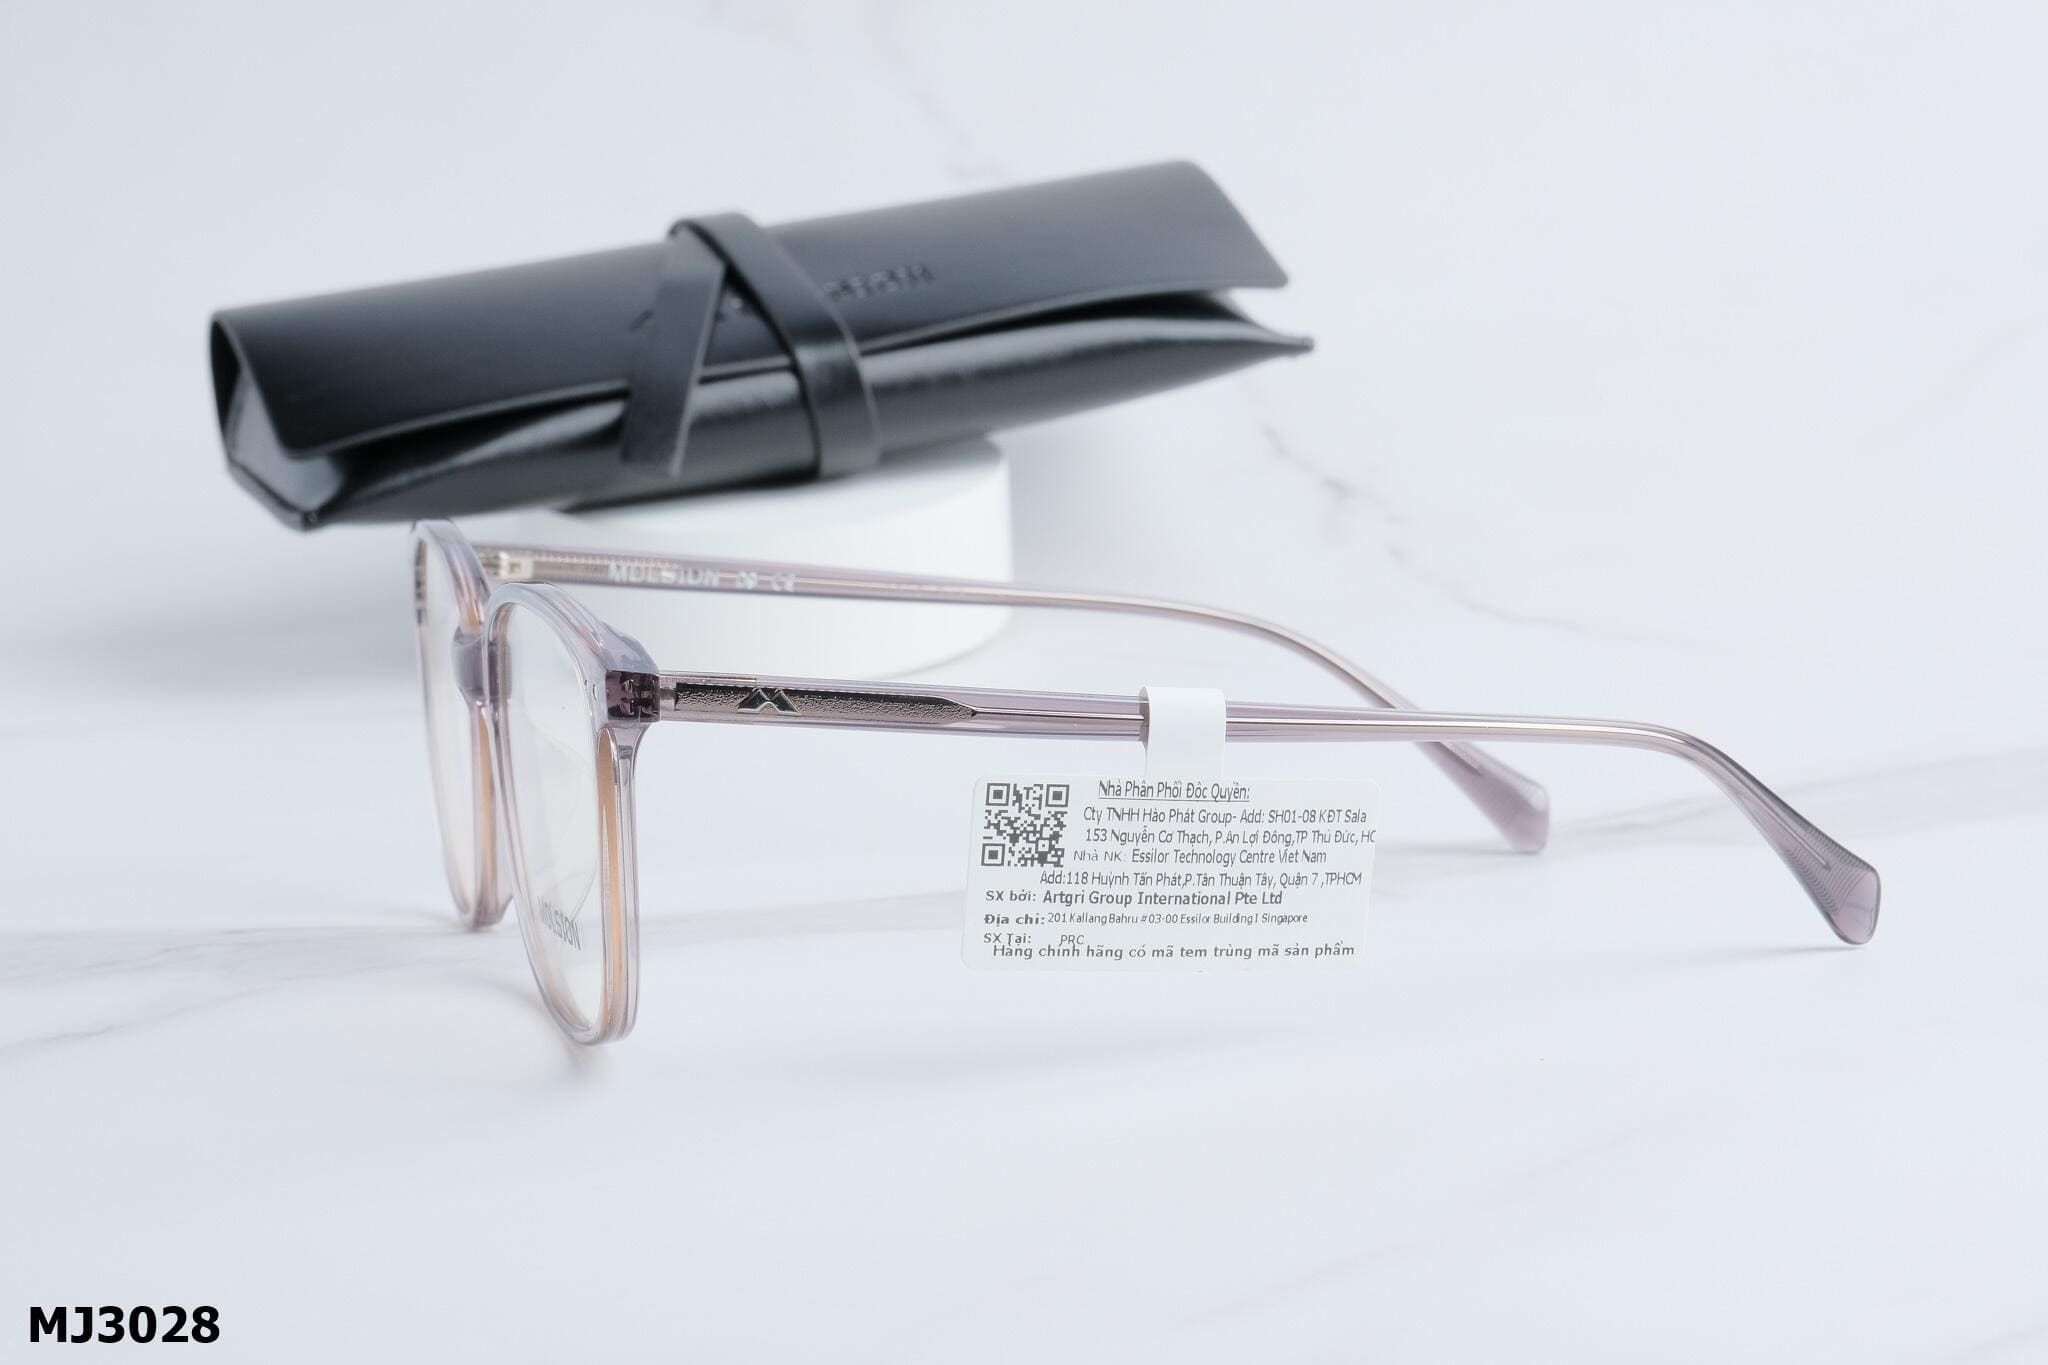  Molsion Eyewear - Glasses - MJ3028 